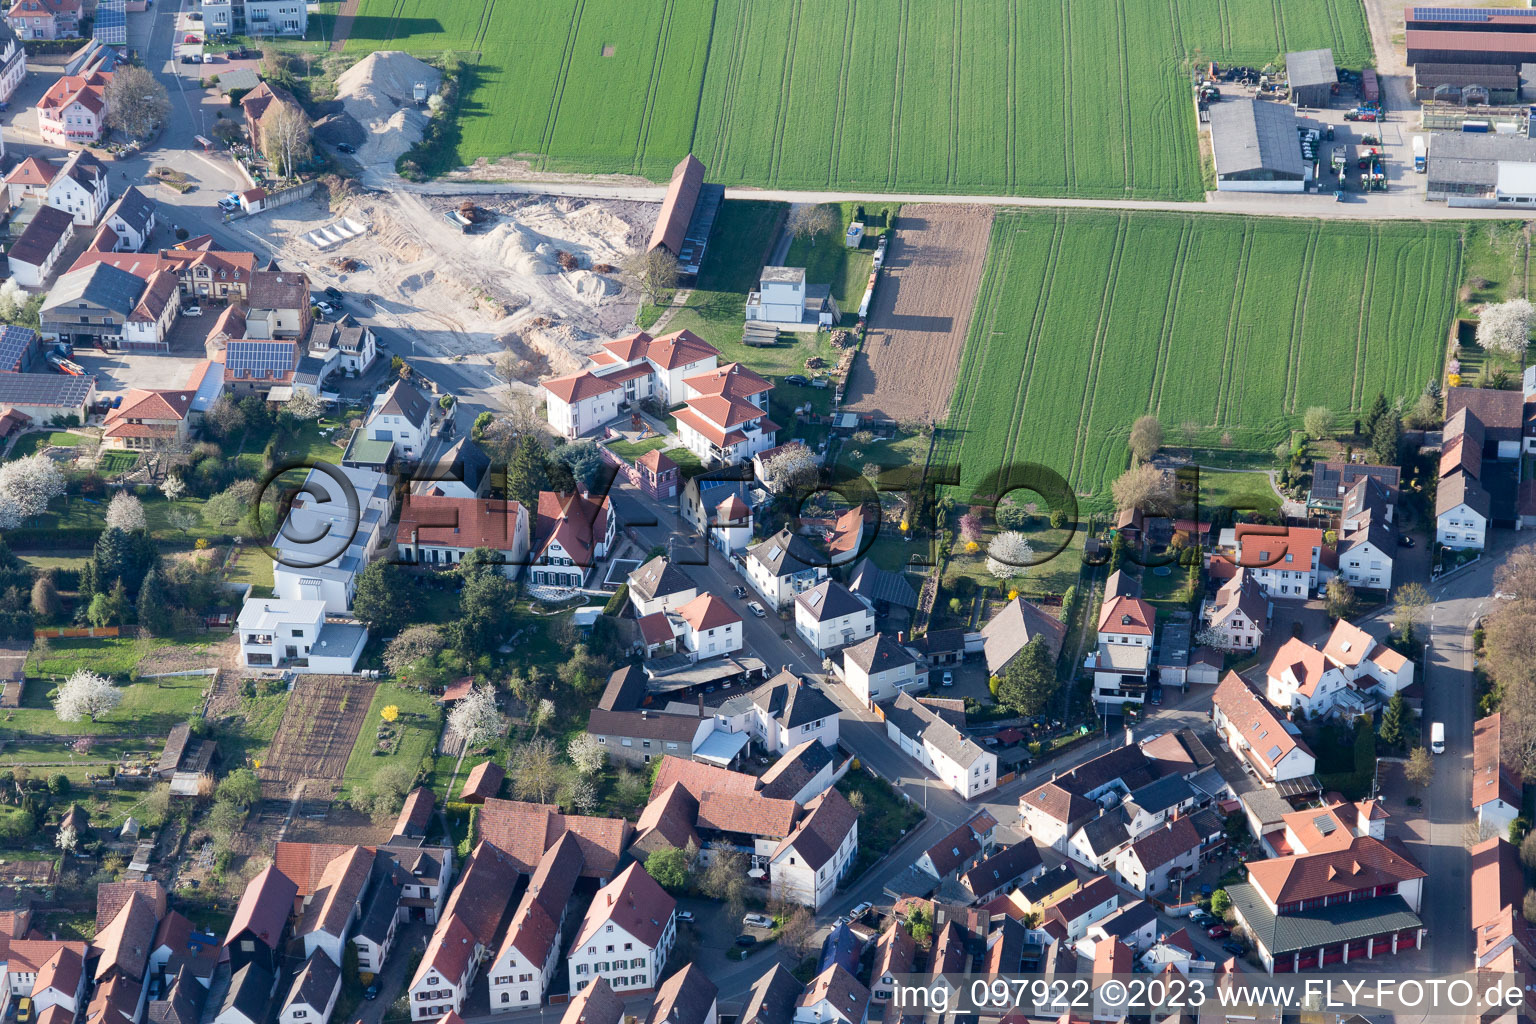 District Herxheim in Herxheim bei Landau/Pfalz in the state Rhineland-Palatinate, Germany from above